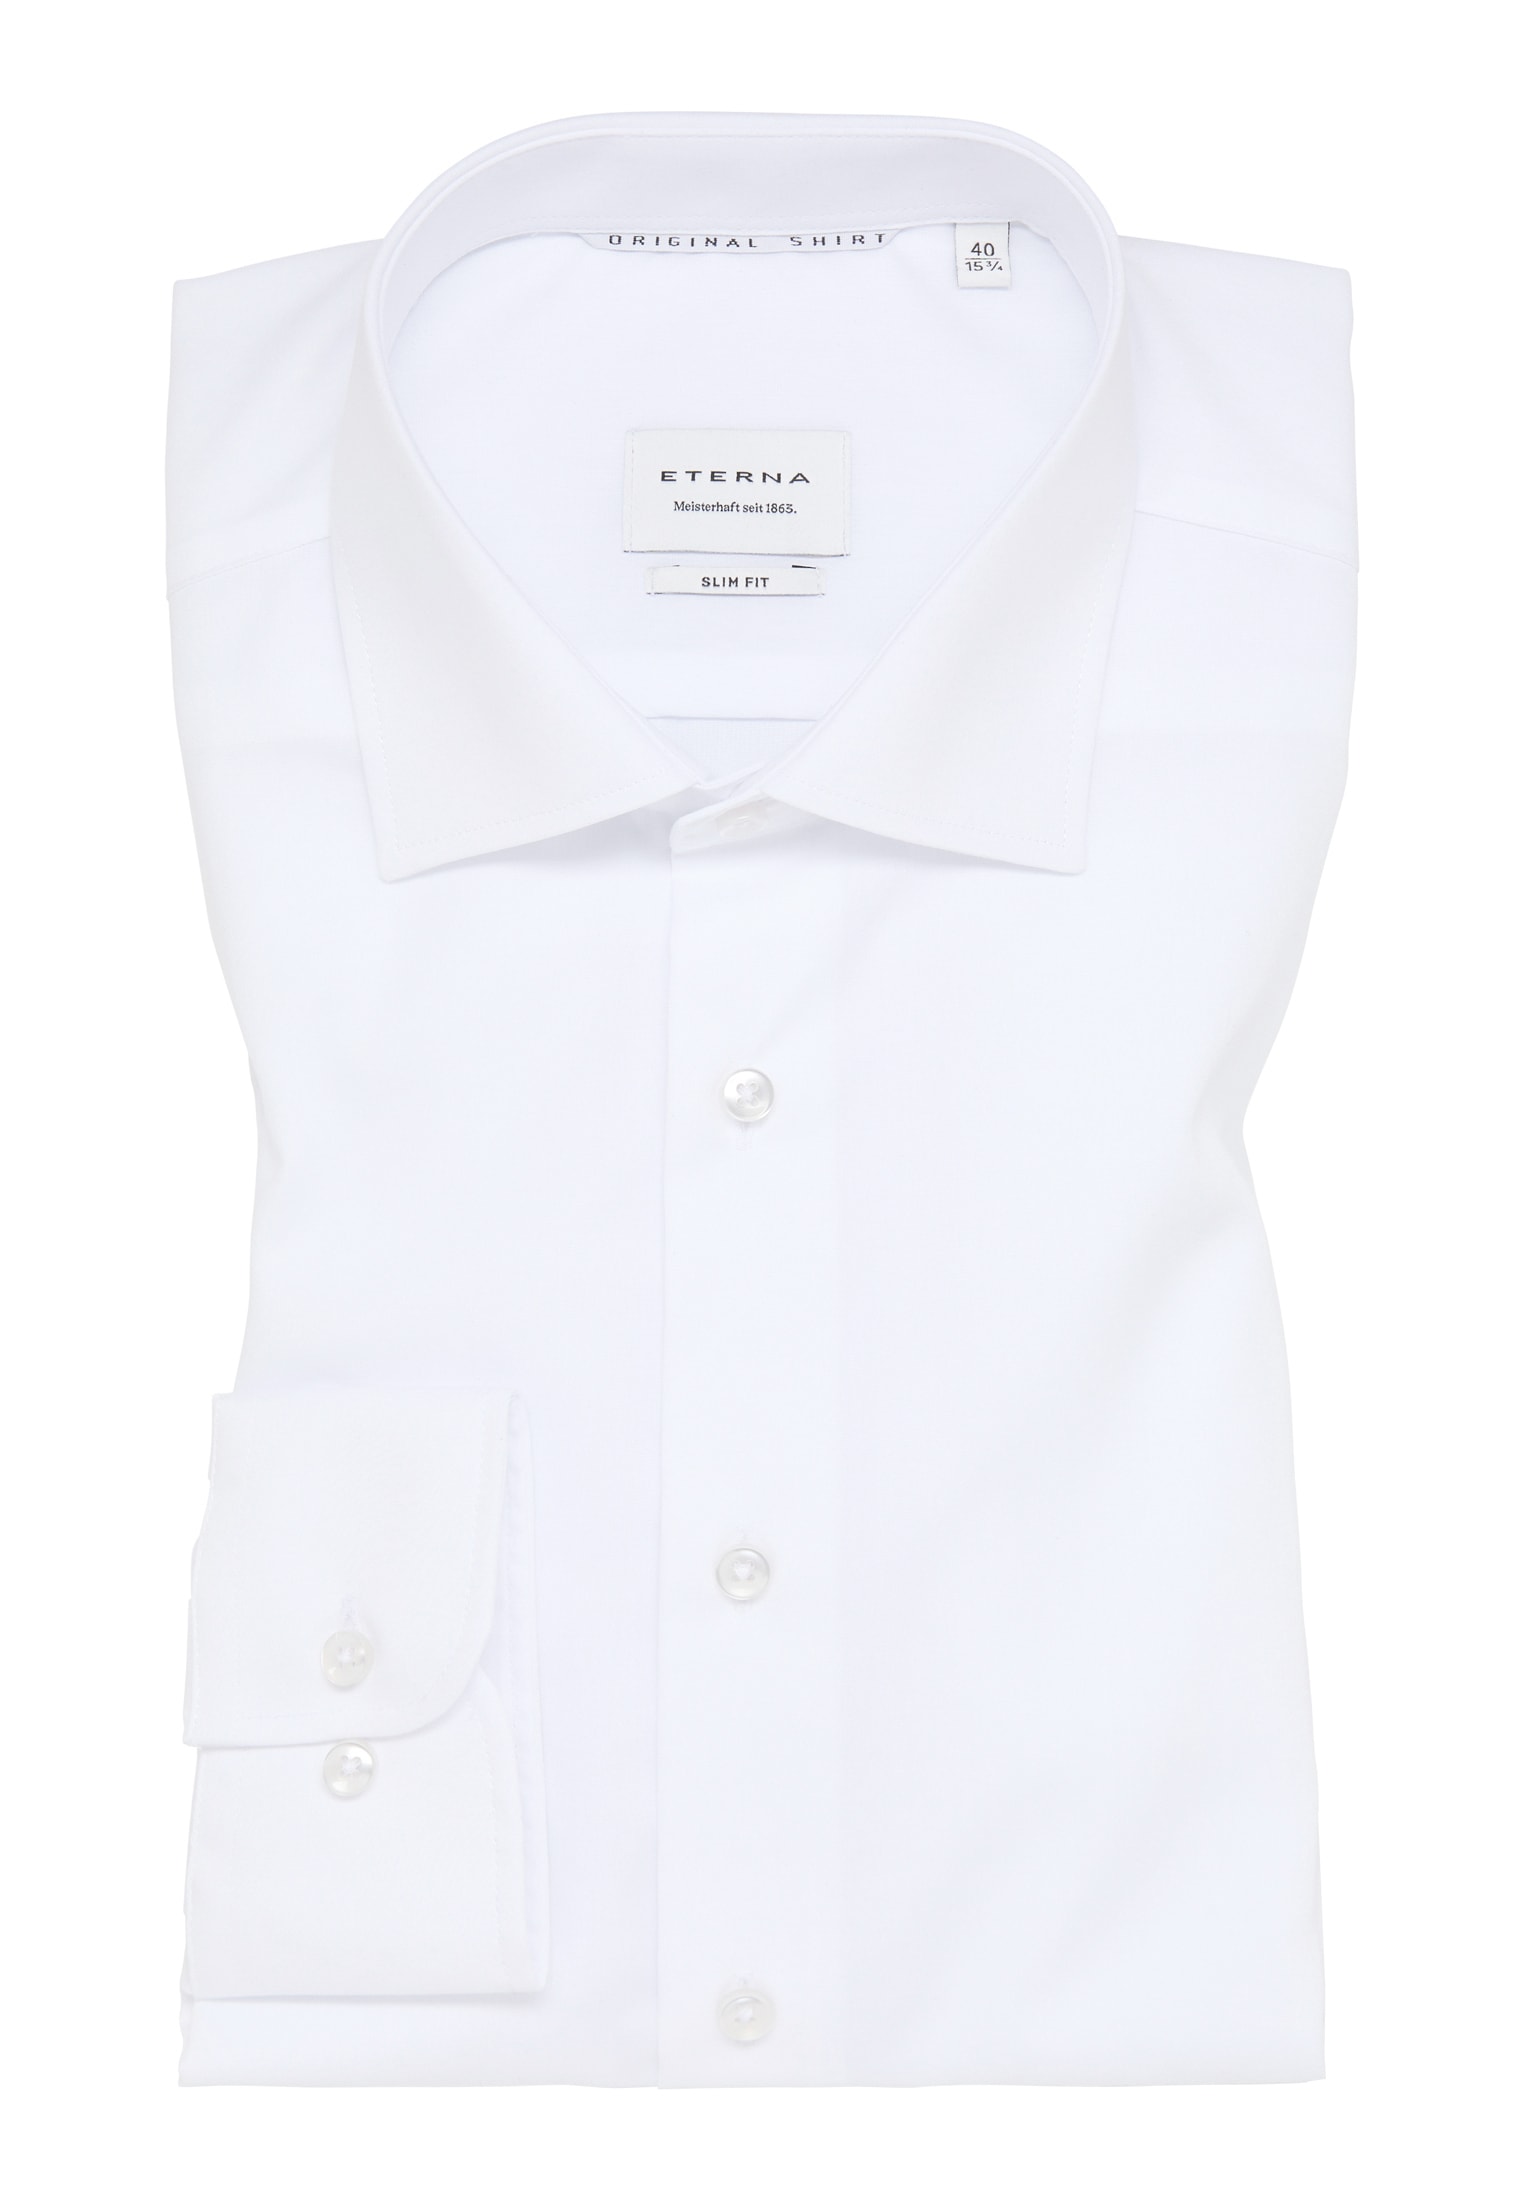 unifarben in weiß FIT | | 40 Langarm weiß | Shirt Original 1SH12598-00-01-40-1/1 | SLIM